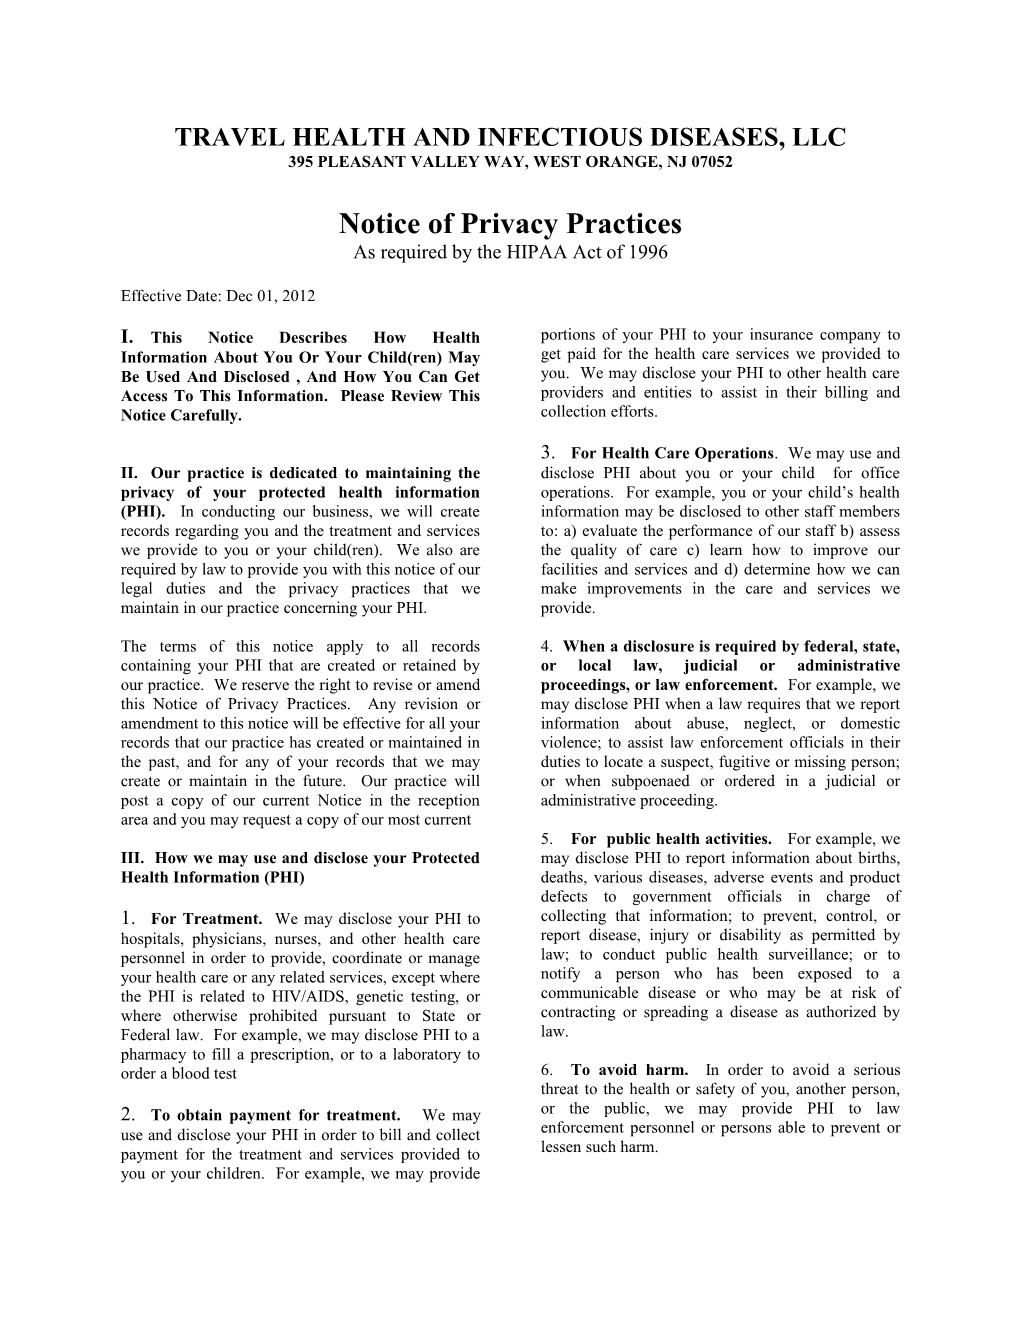 Ivy Pediatrics, PA Notice of Privacy Practices